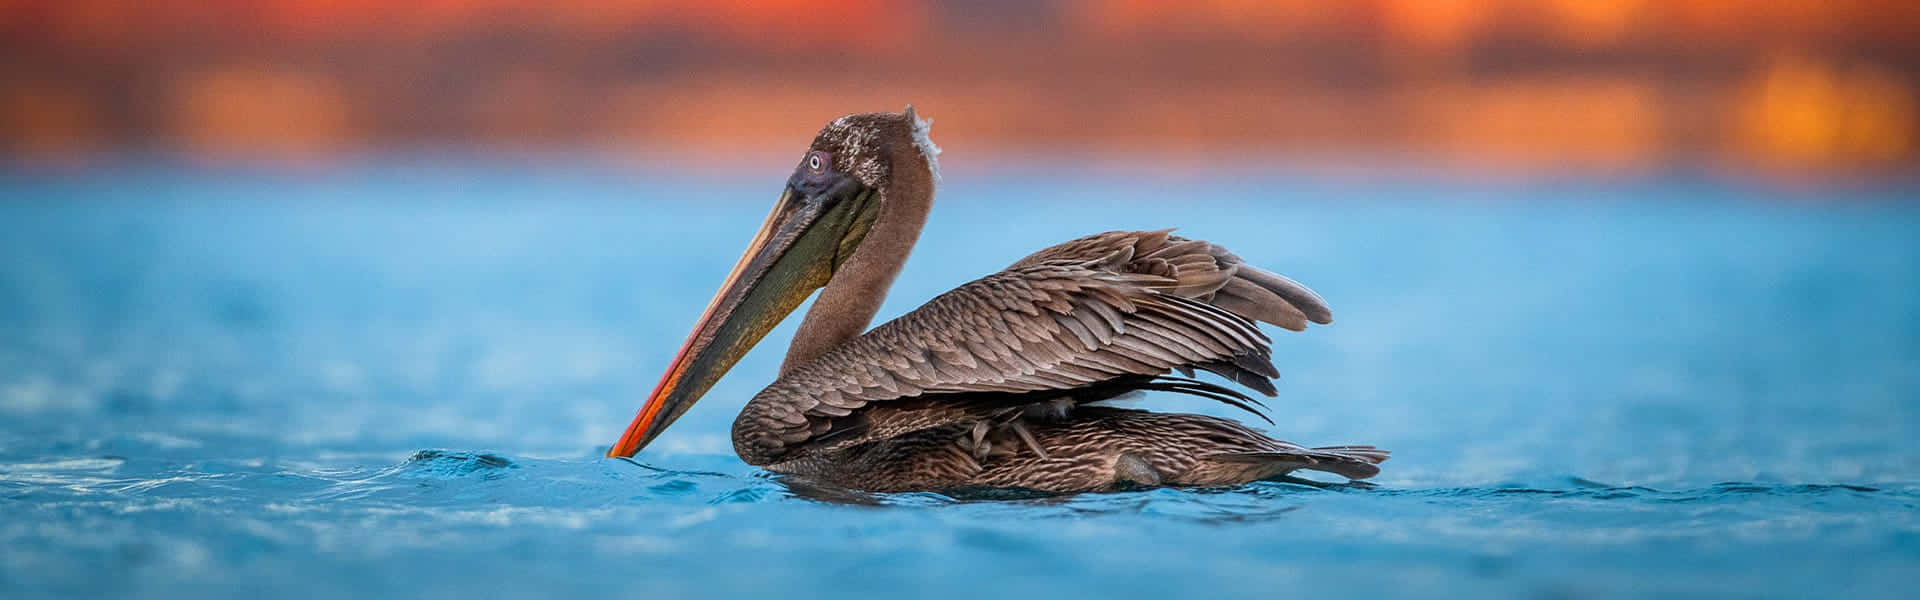 Pelican Sunset Swim.jpg Wallpaper